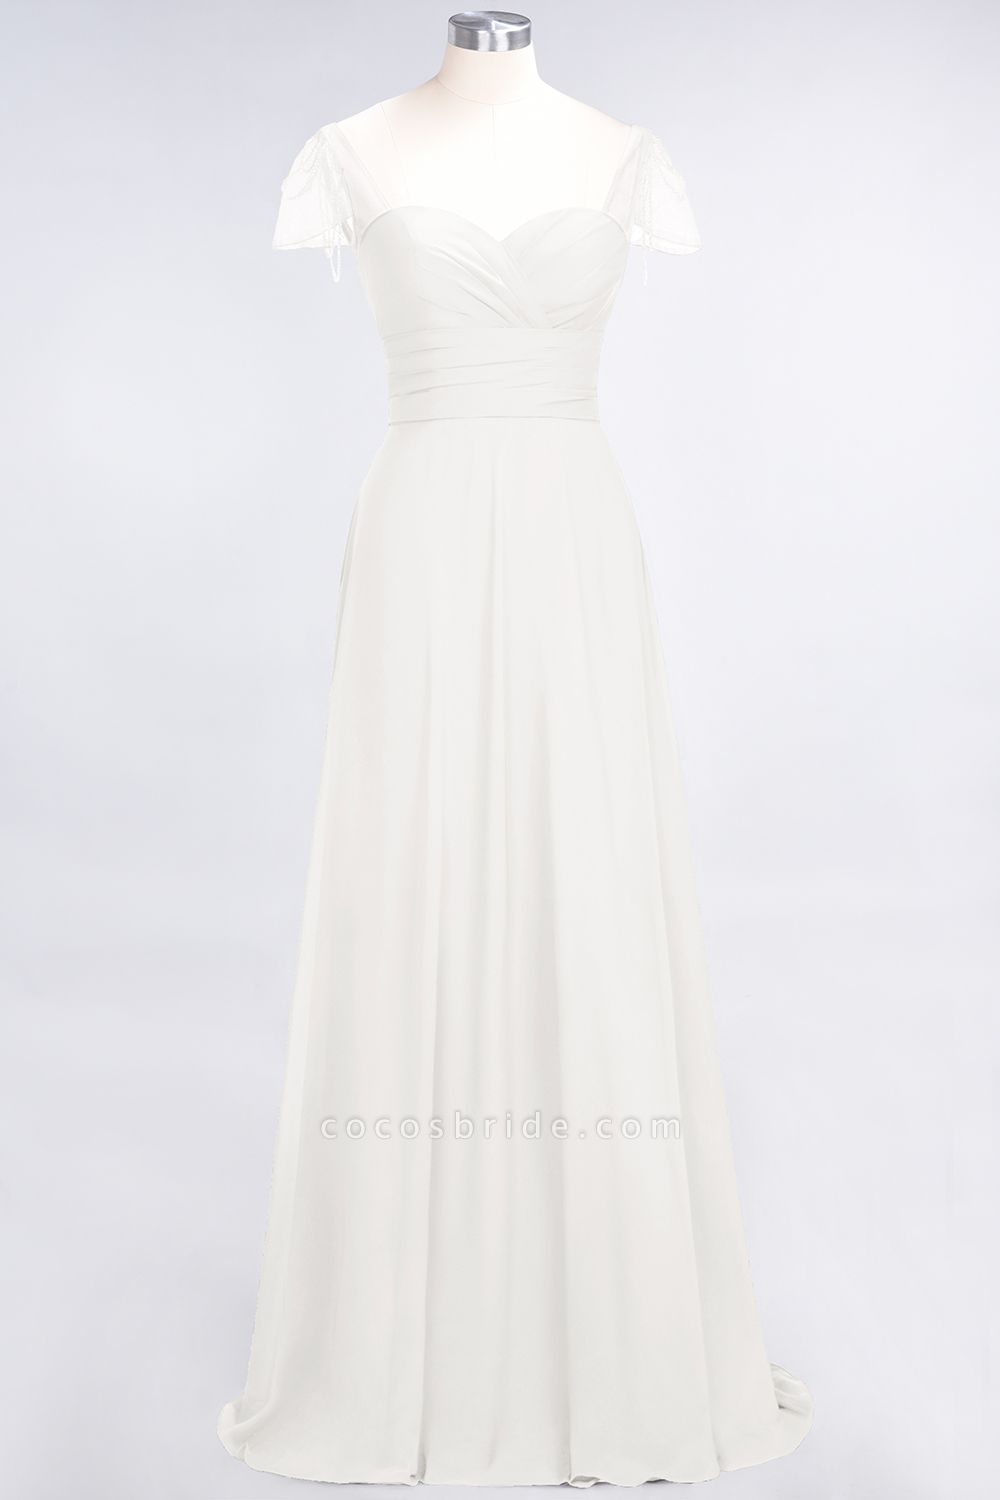 A-Line Chiffon Sweetheart Cap-Sleeves Ruffle Floor-Length Bridesmaid Dress with Beadings